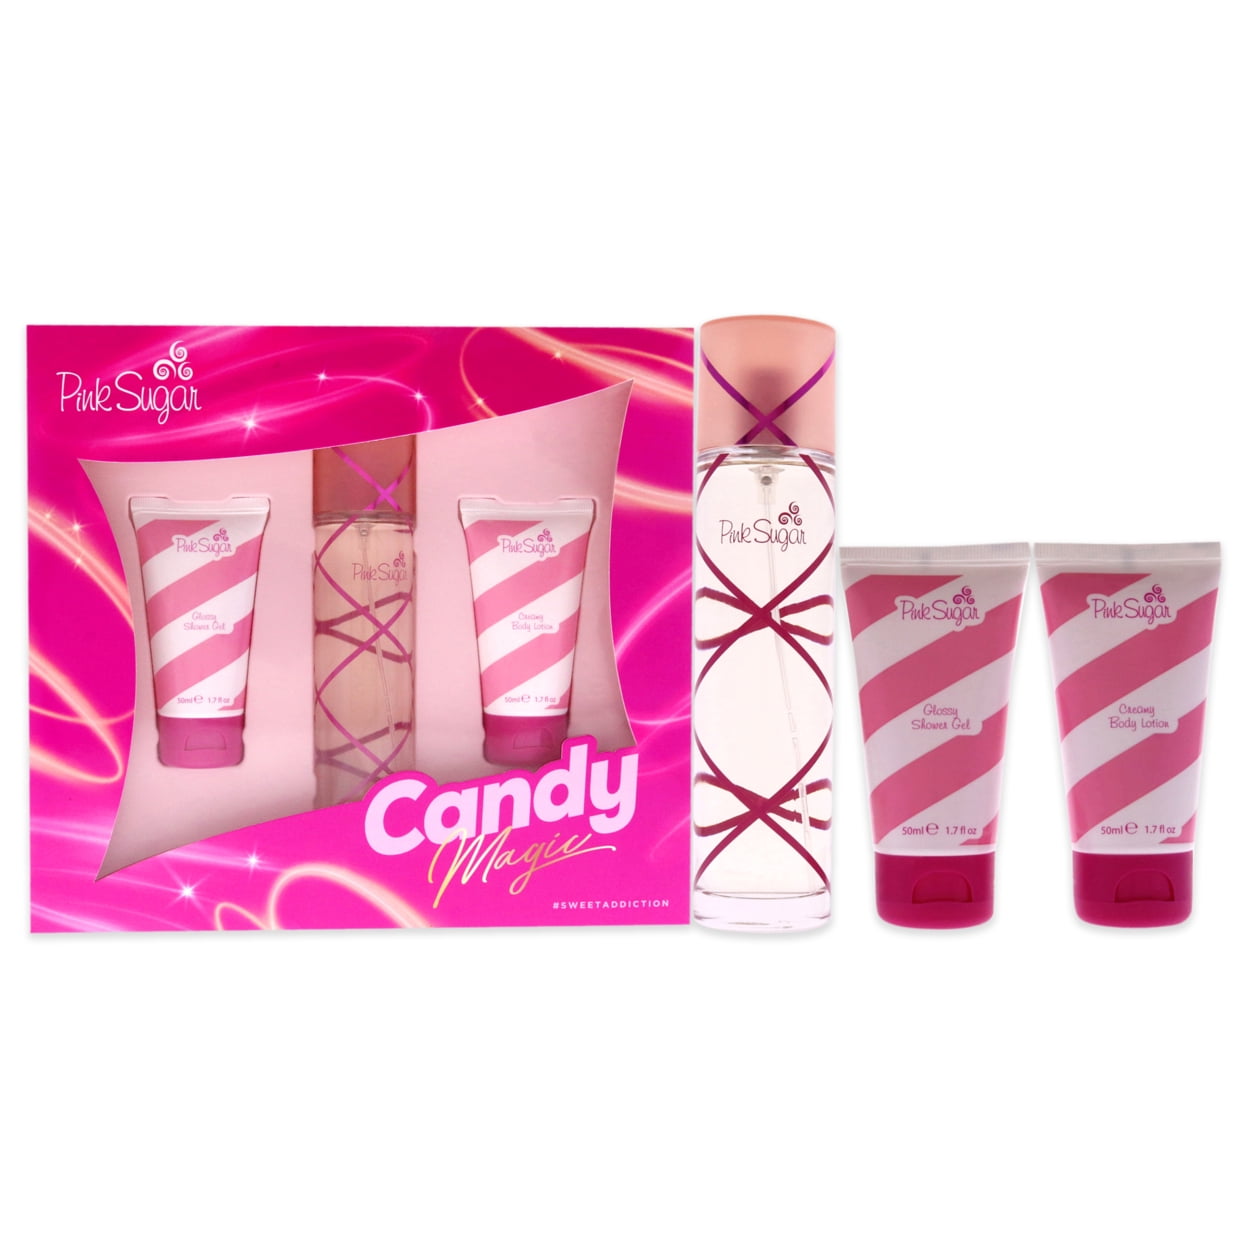  Pink Sugar Candy Dream 3 Pc Gift Set for Women, Travel Size,  Eau de Toilette Perfume for Women, Body Lotion + Shower Gel : Beauty &  Personal Care